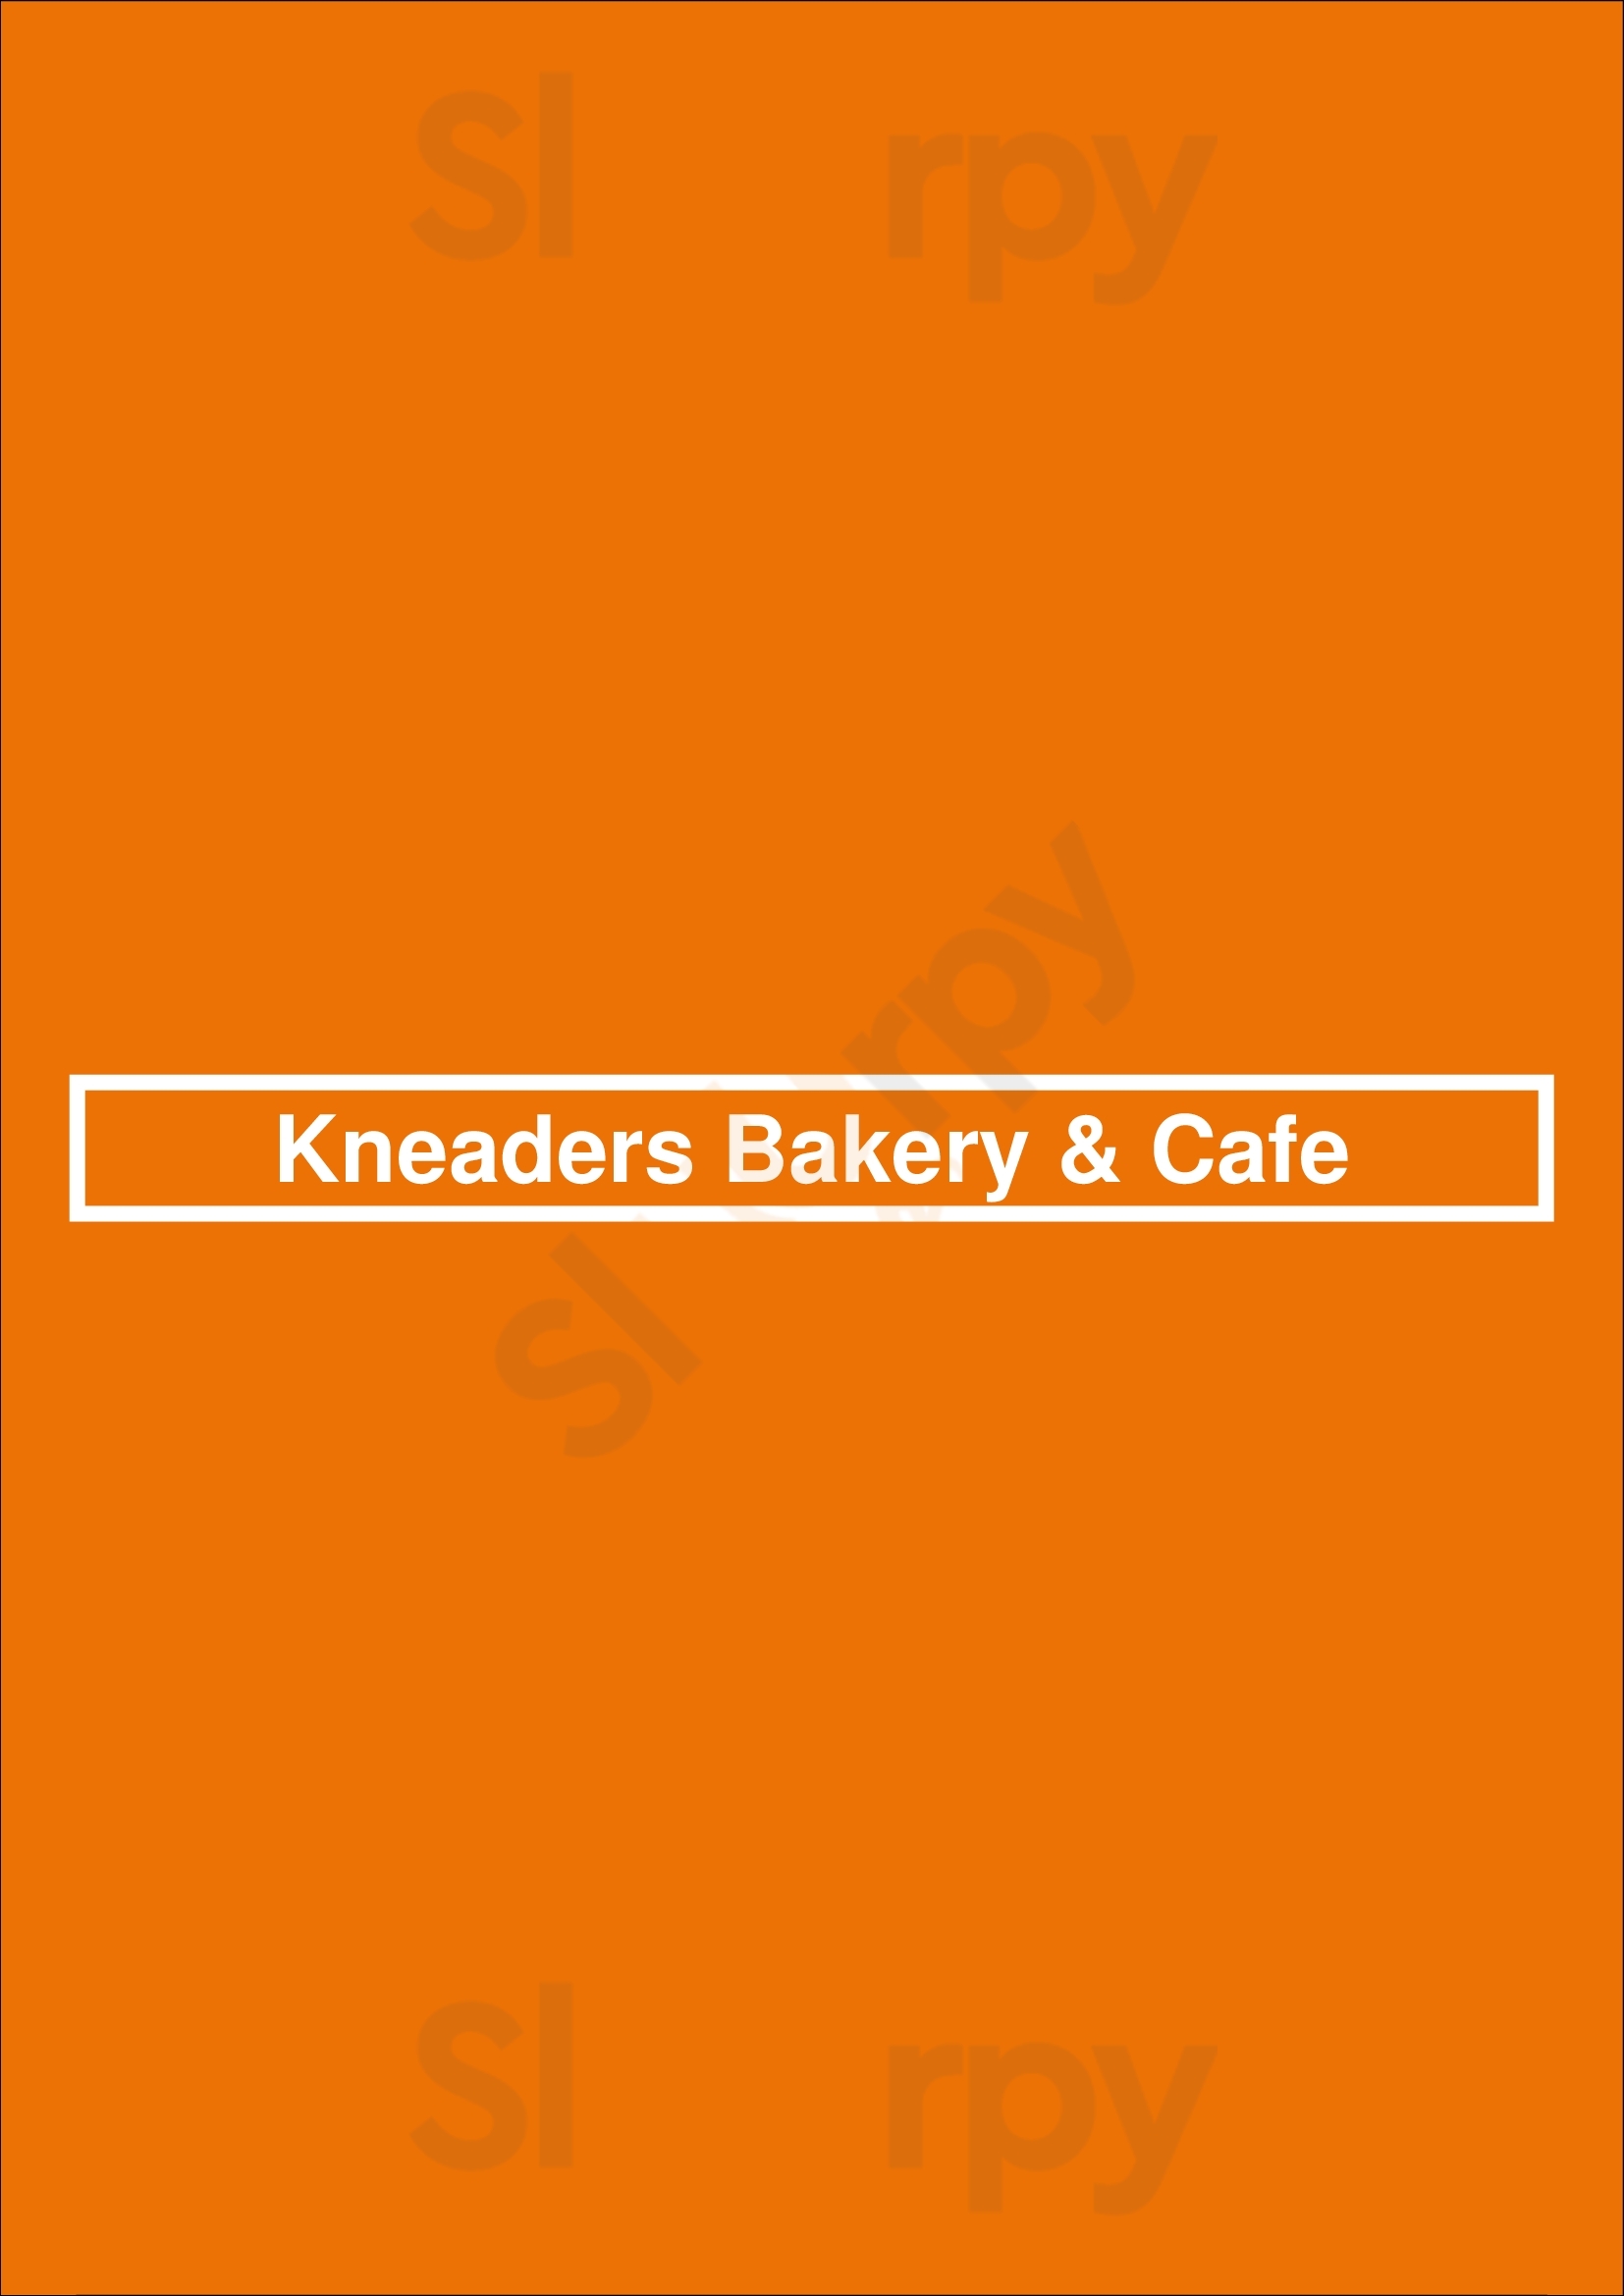 Kneaders Bakery & Cafe Wichita Menu - 1